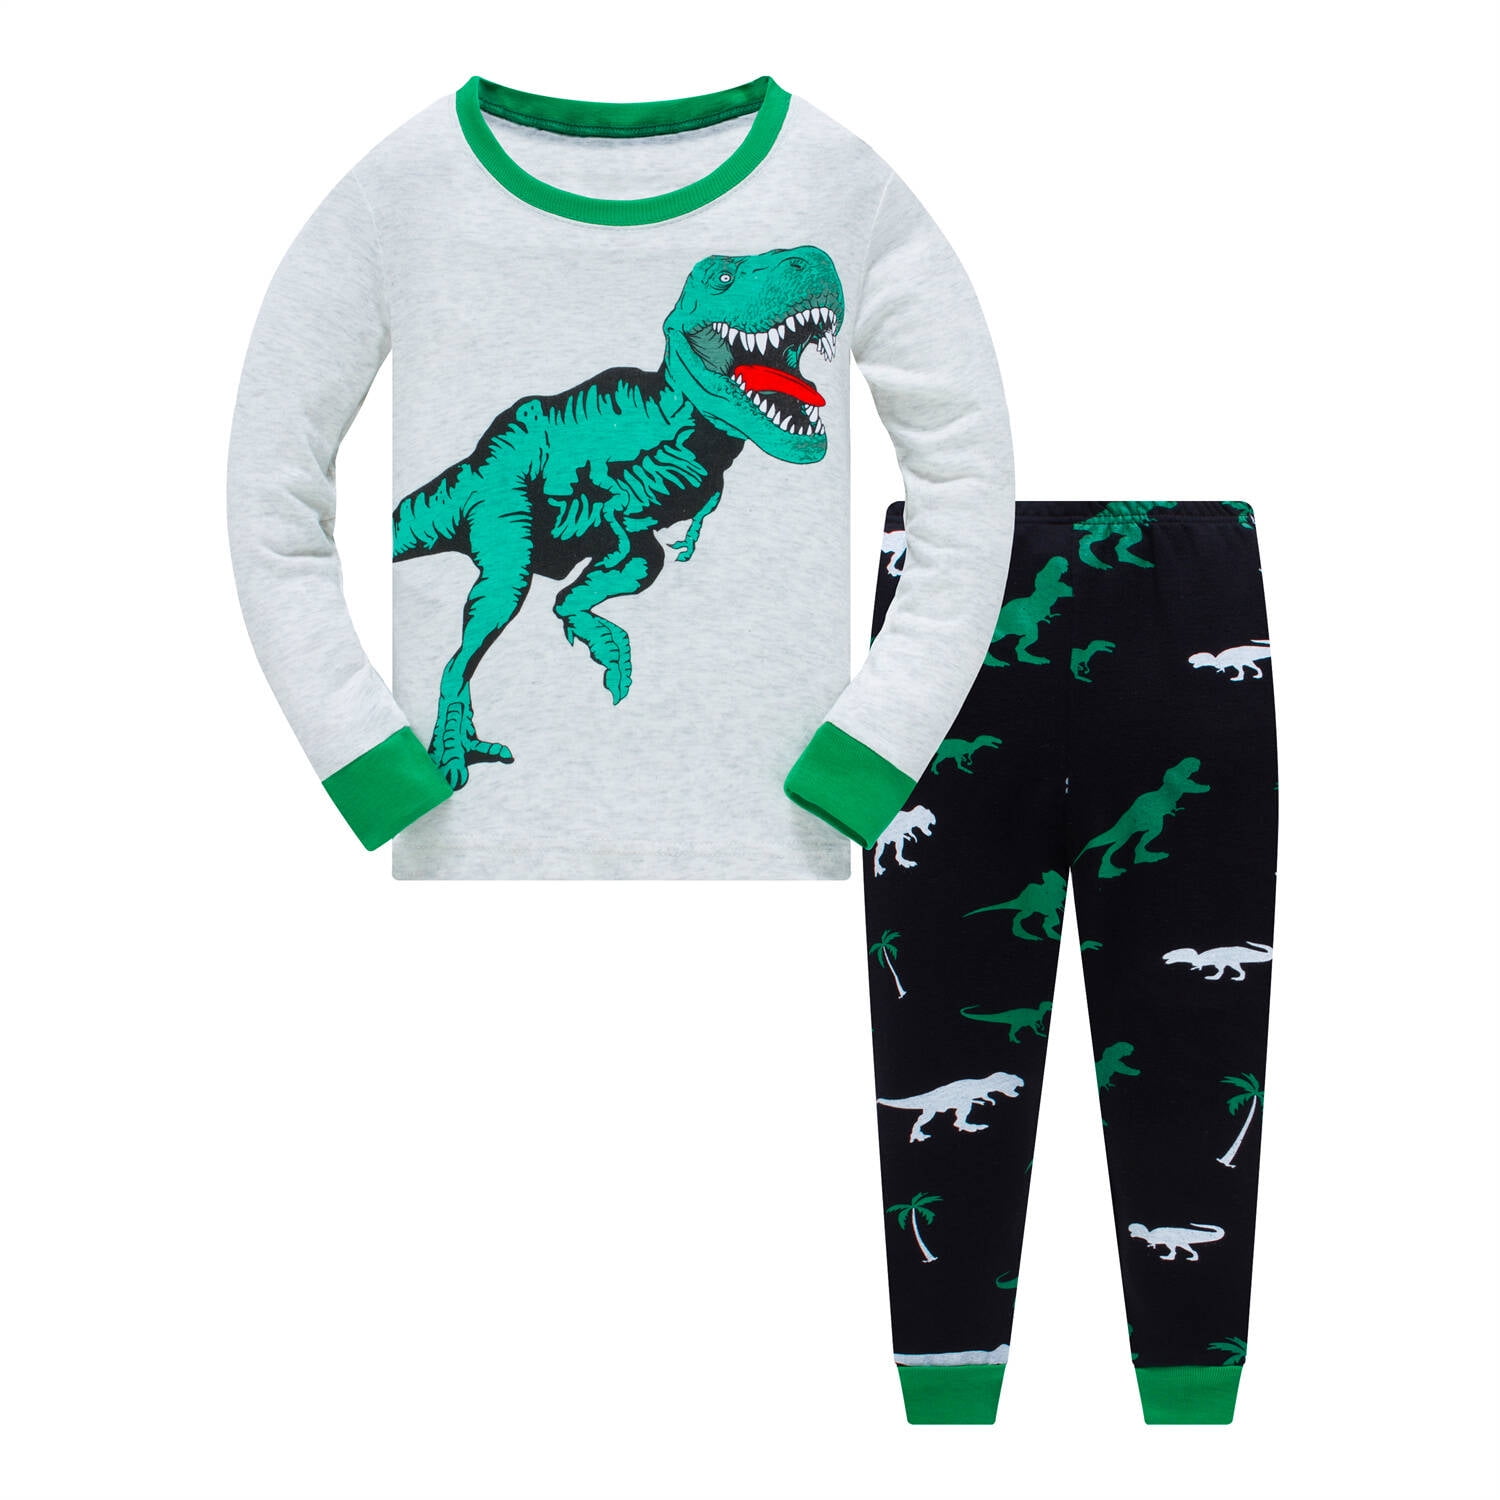 Popshion Boys Pajamas Toddler 100% Cotton Long Sleeve Pjs Set T-Rex ...